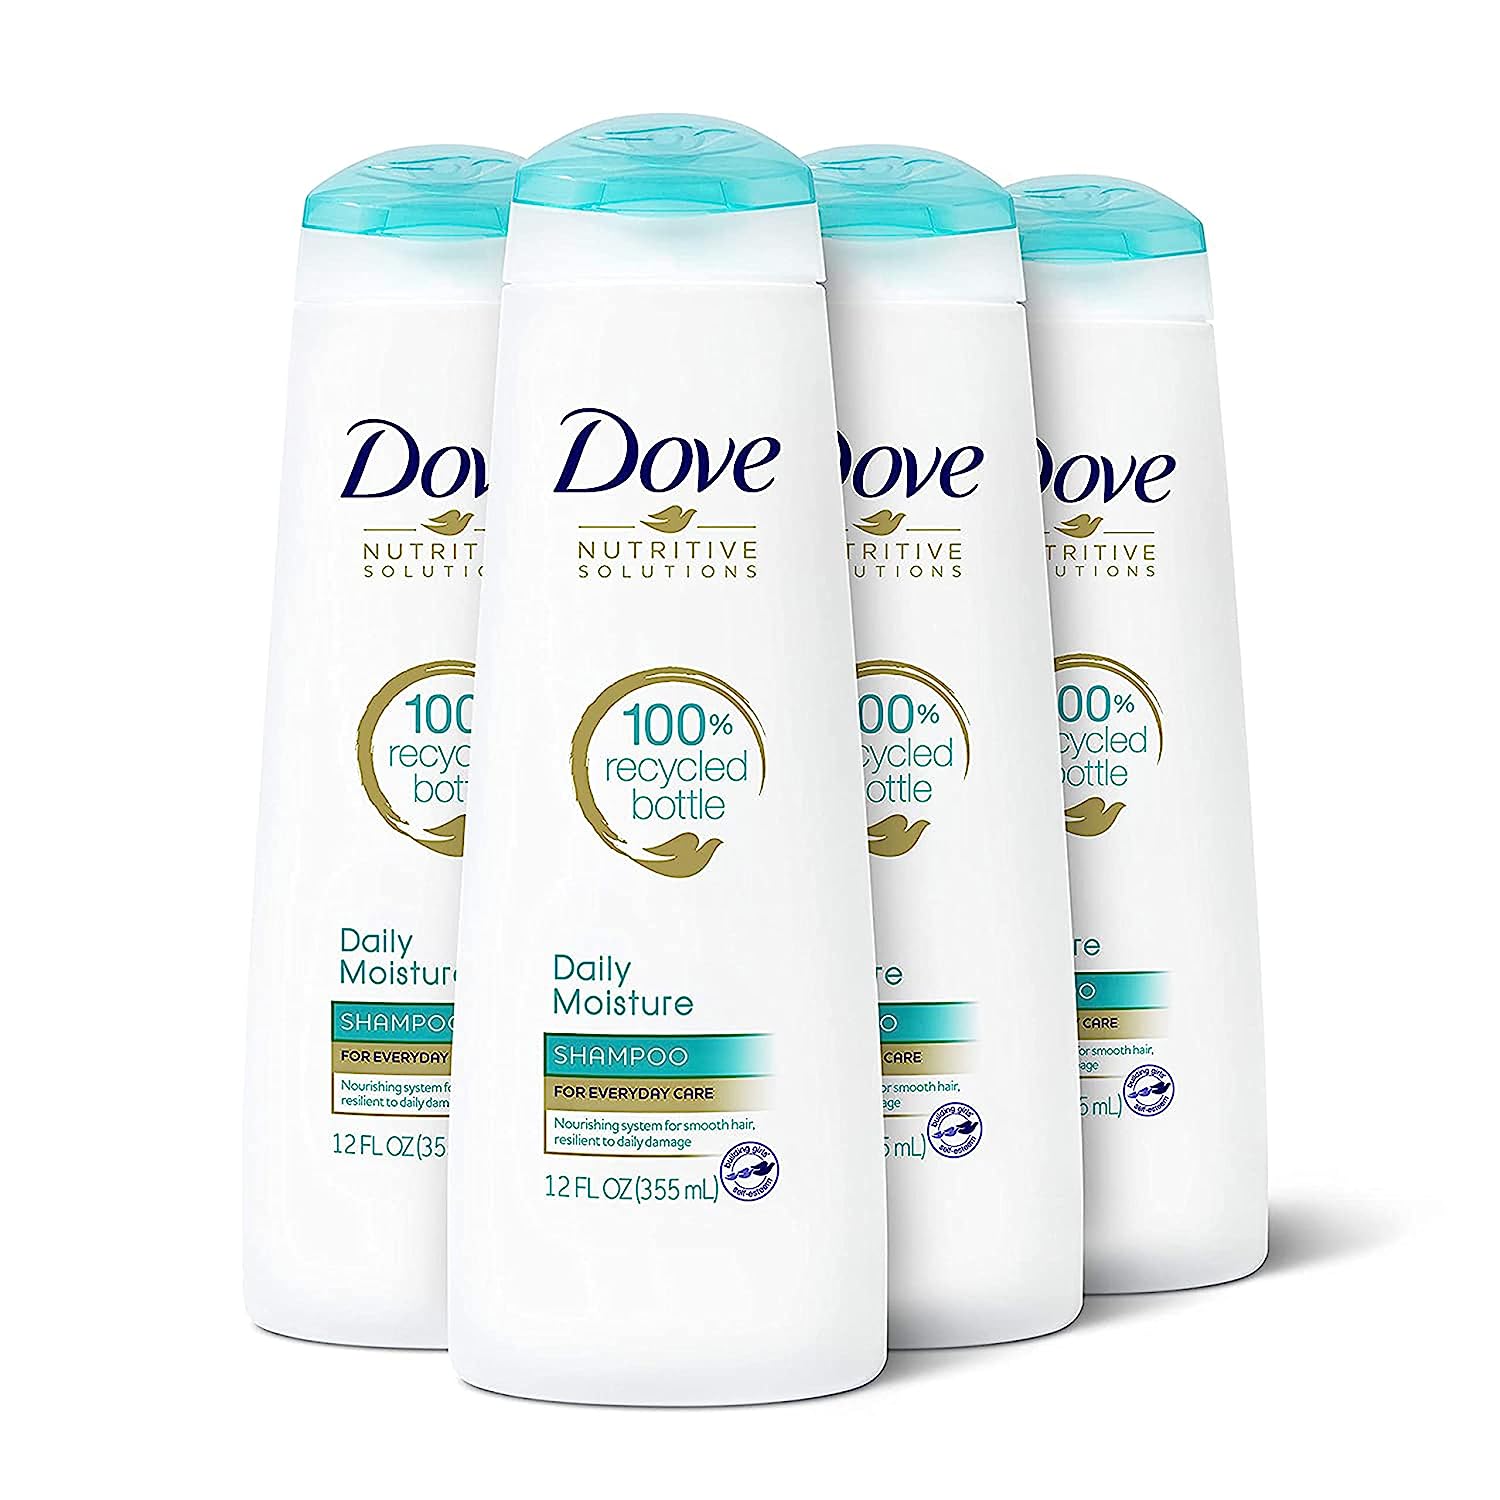 Dove Nutritive Solutions Moisturizing Shampoo Daily [...]